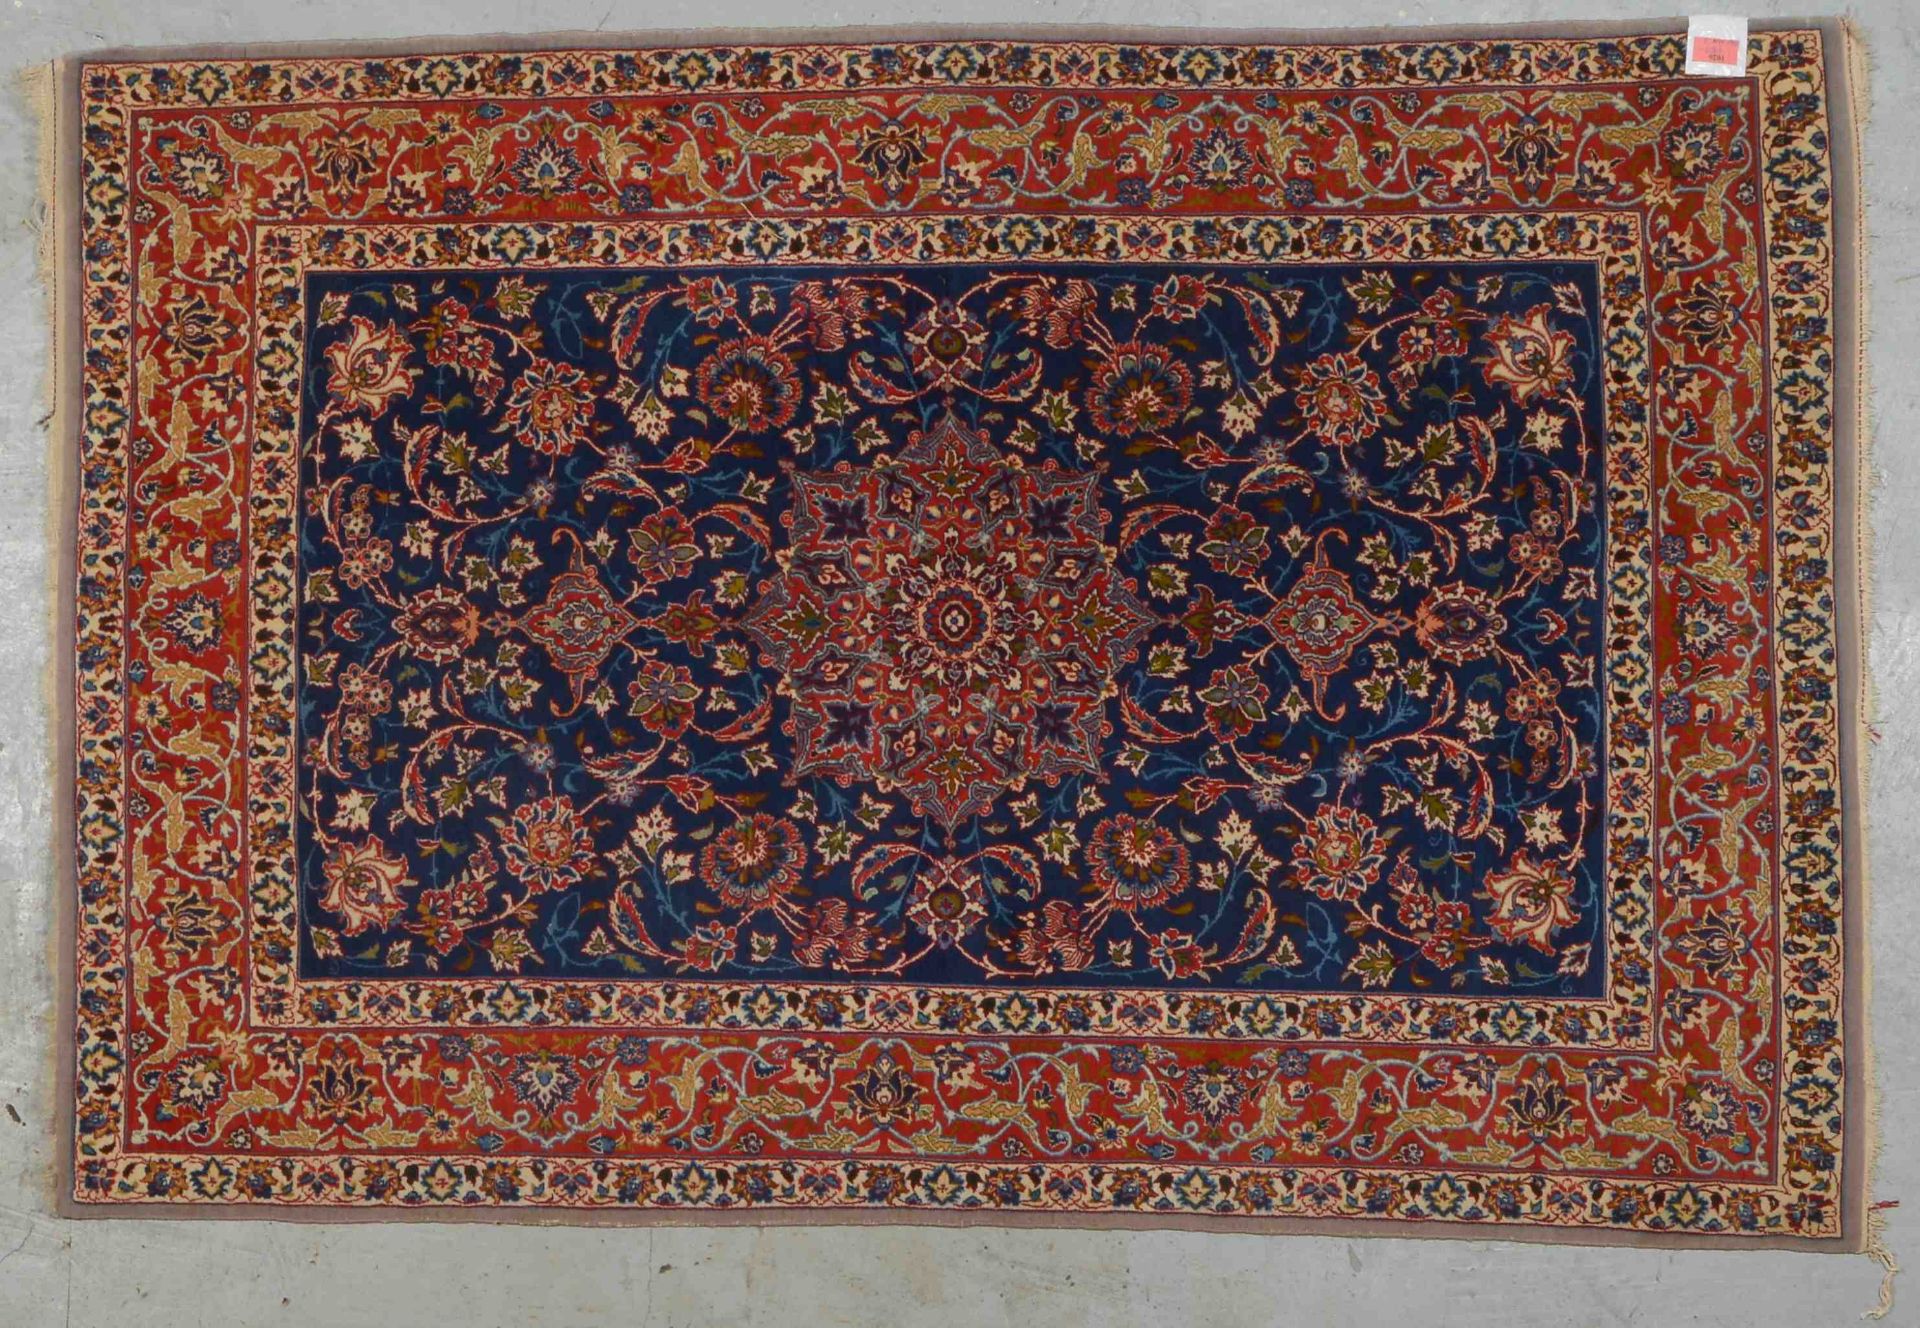 Isfahan-Br&uuml;cke, sehr feine Kn&uuml;pfung, fast 1 Mio. Knoten/qm, gleichm&auml;&szlig;iger Flor